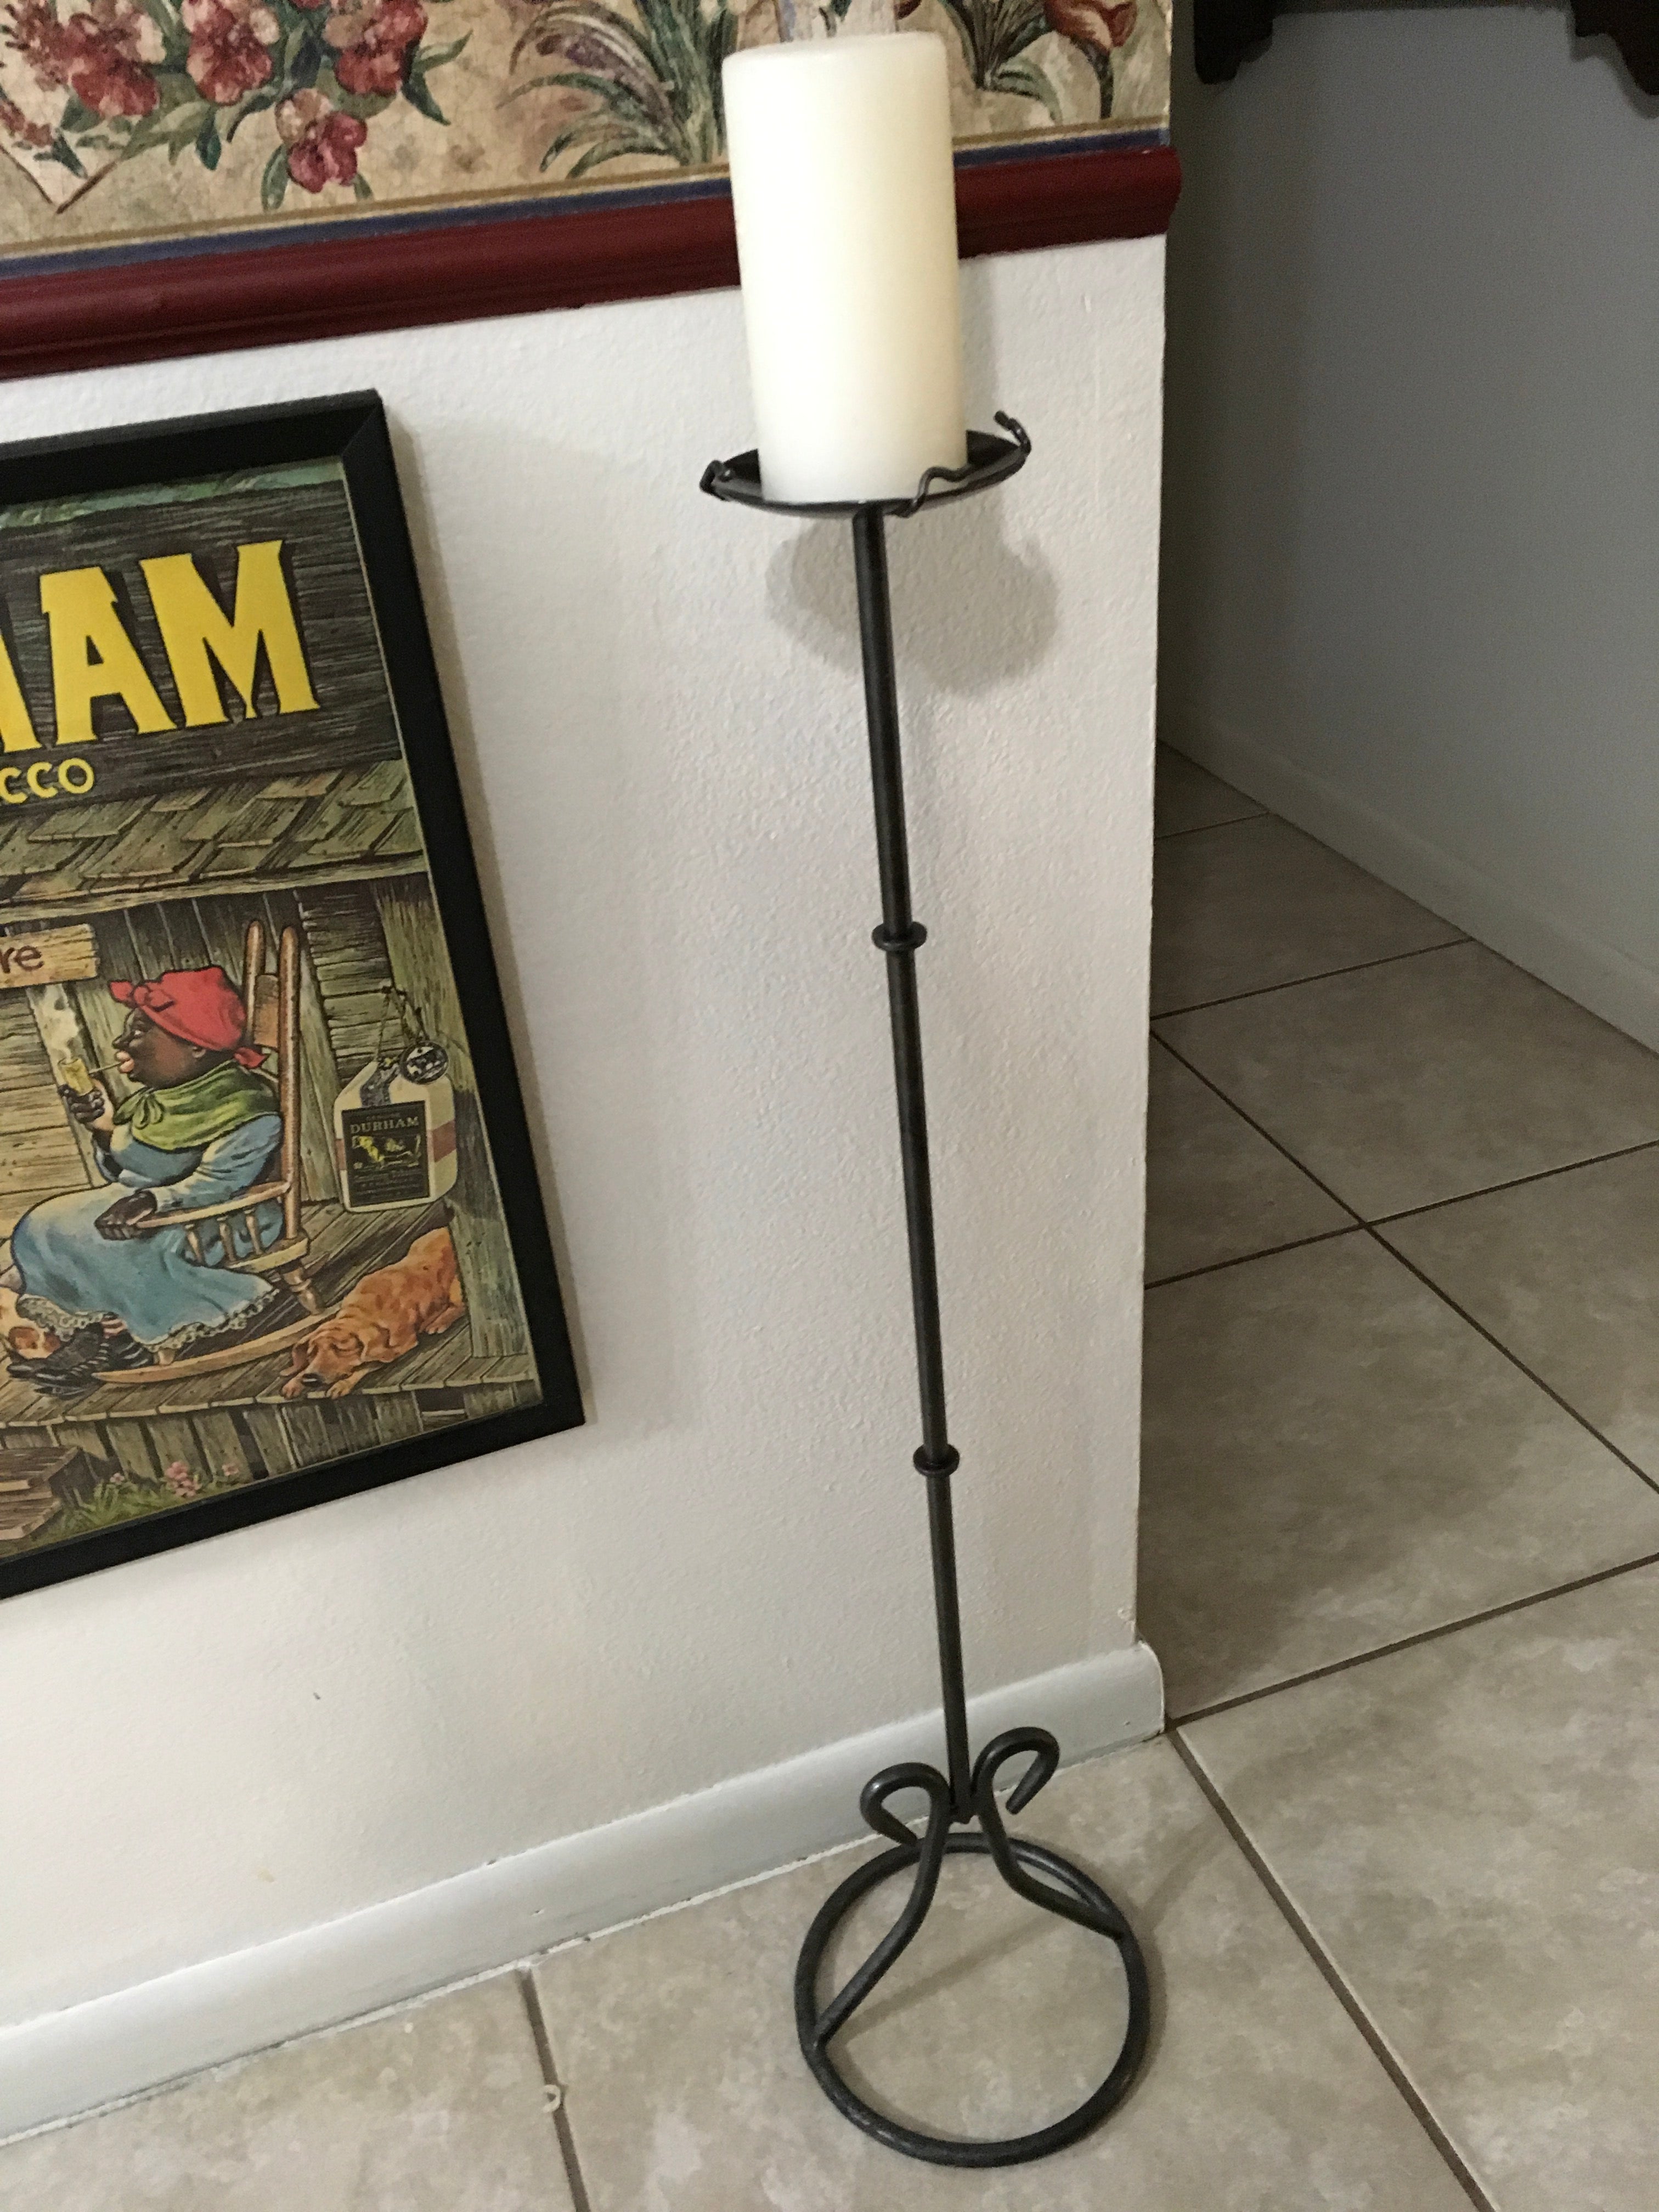 Candle Holder Pedestal Floor Pillar Vintage Metal 36 Inches Tall